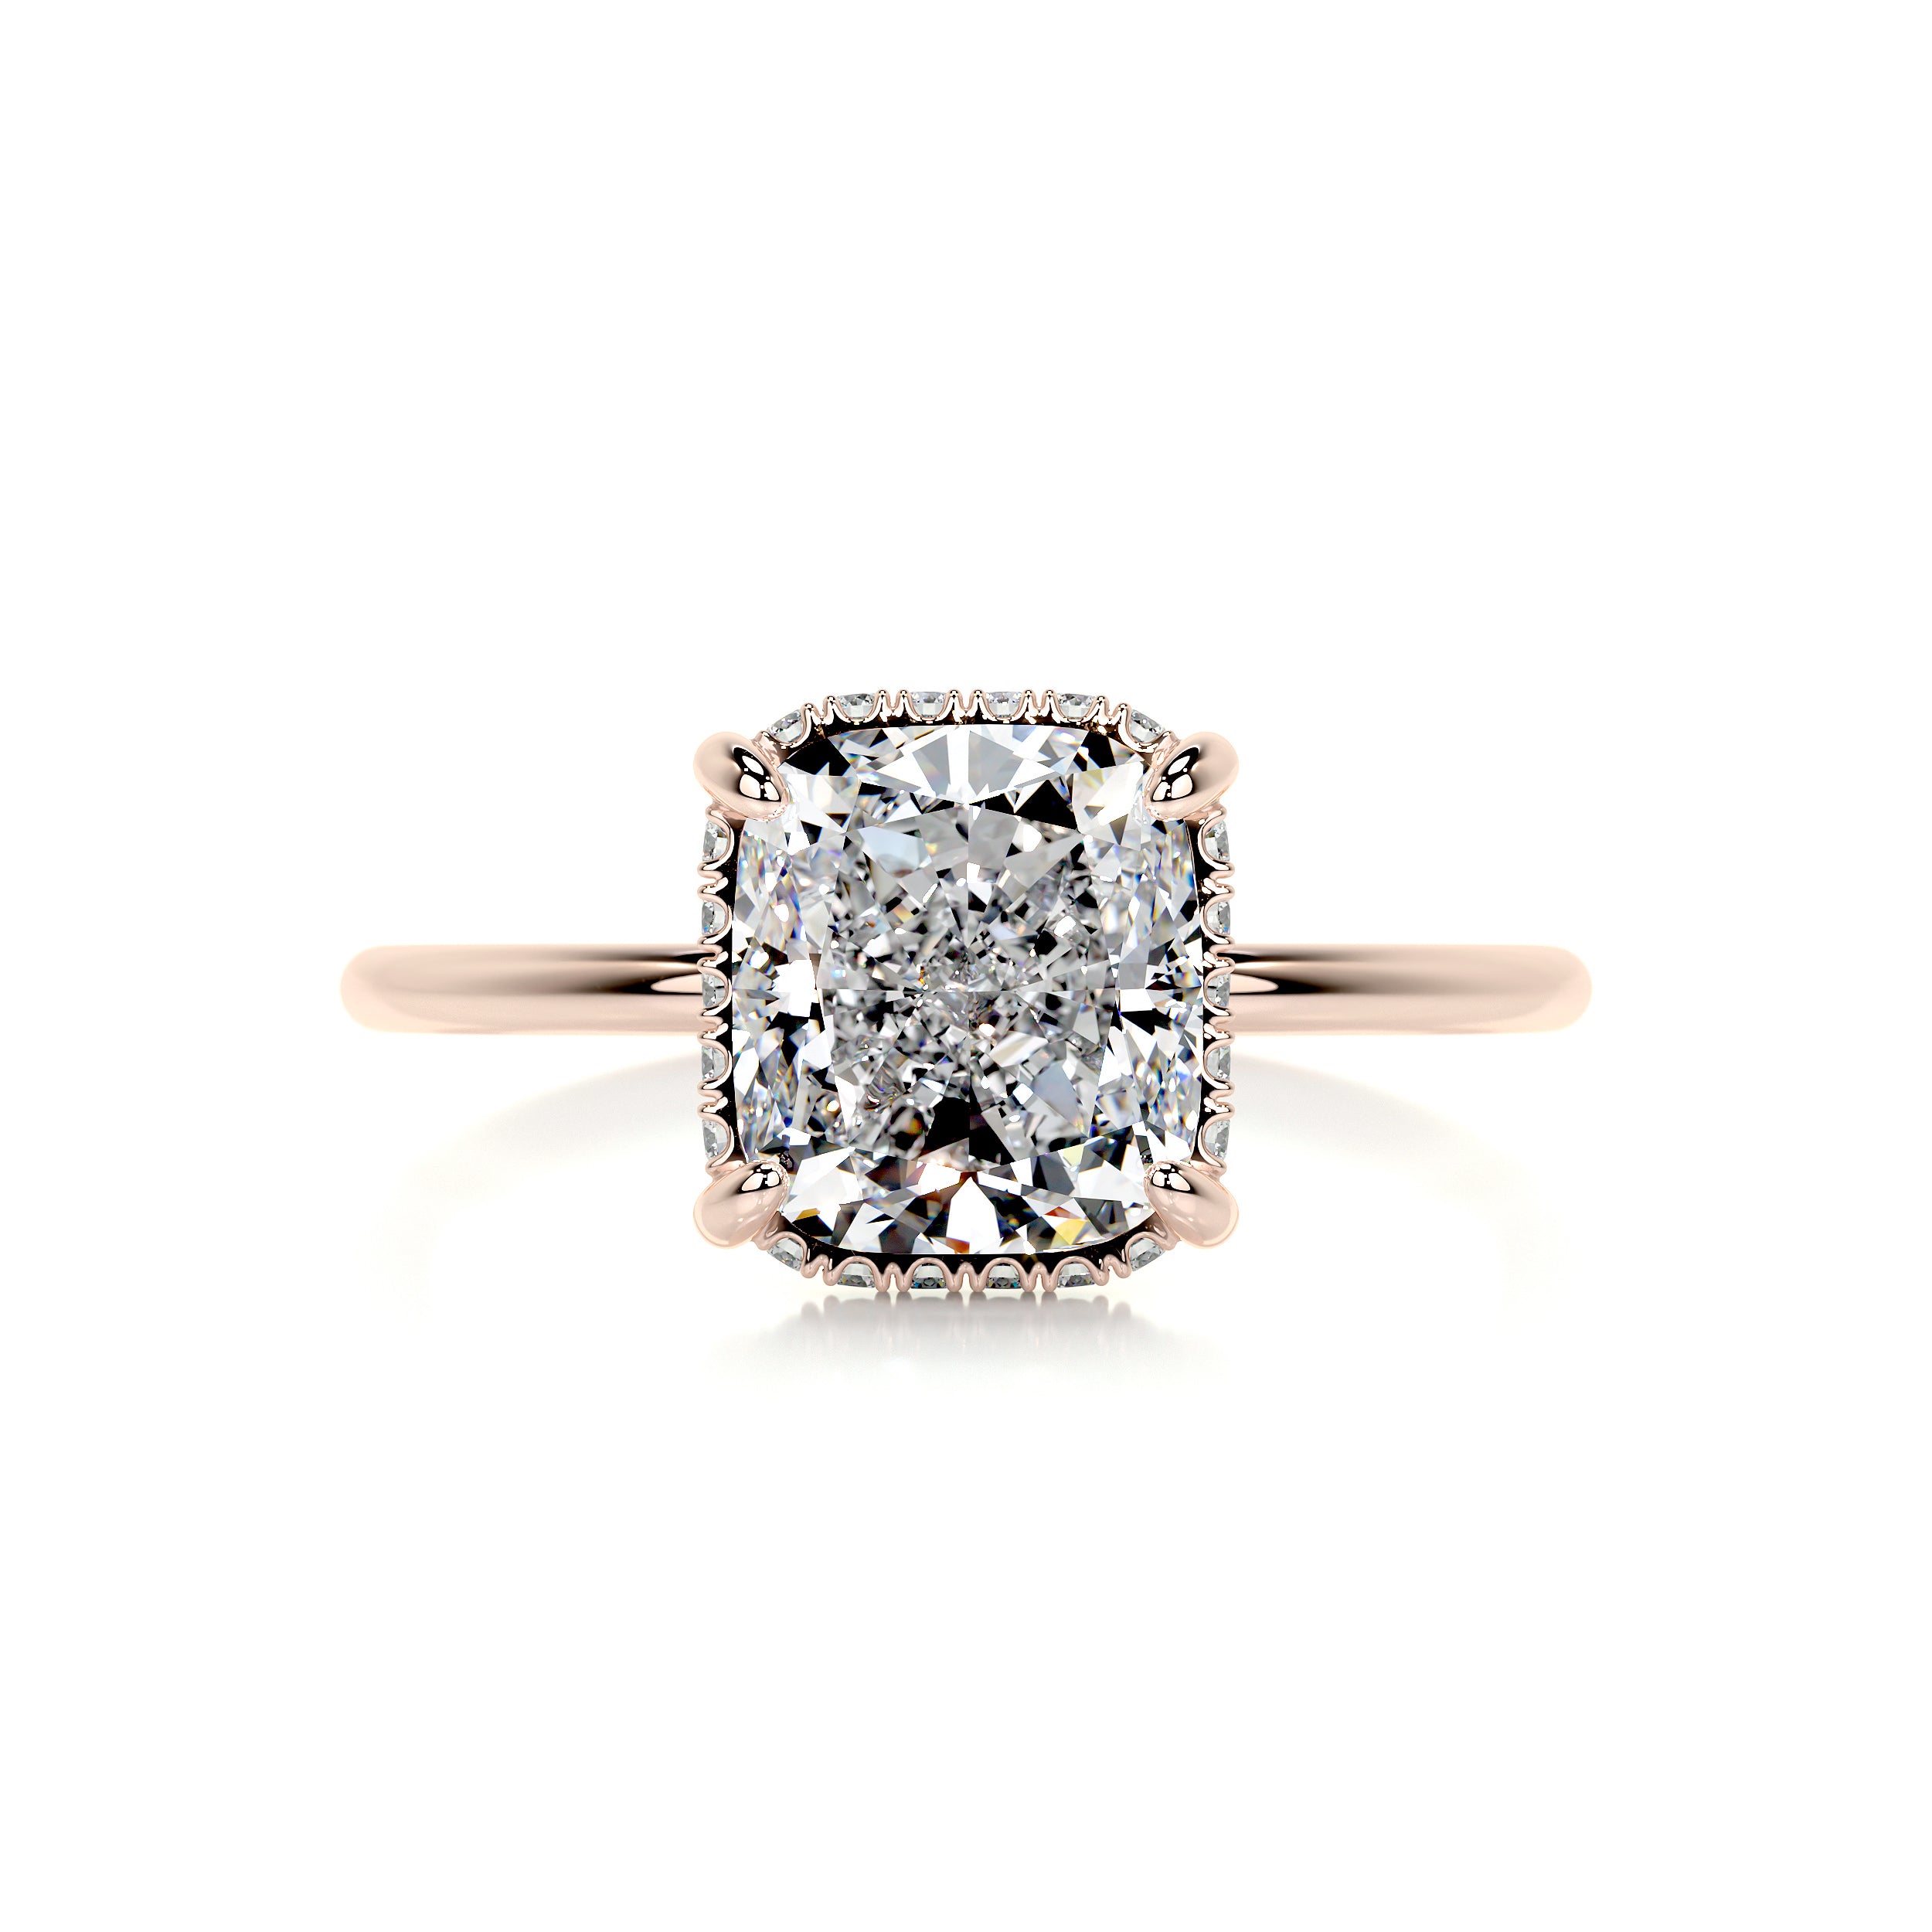 Priscilla Diamond Engagement Ring -14K Rose Gold